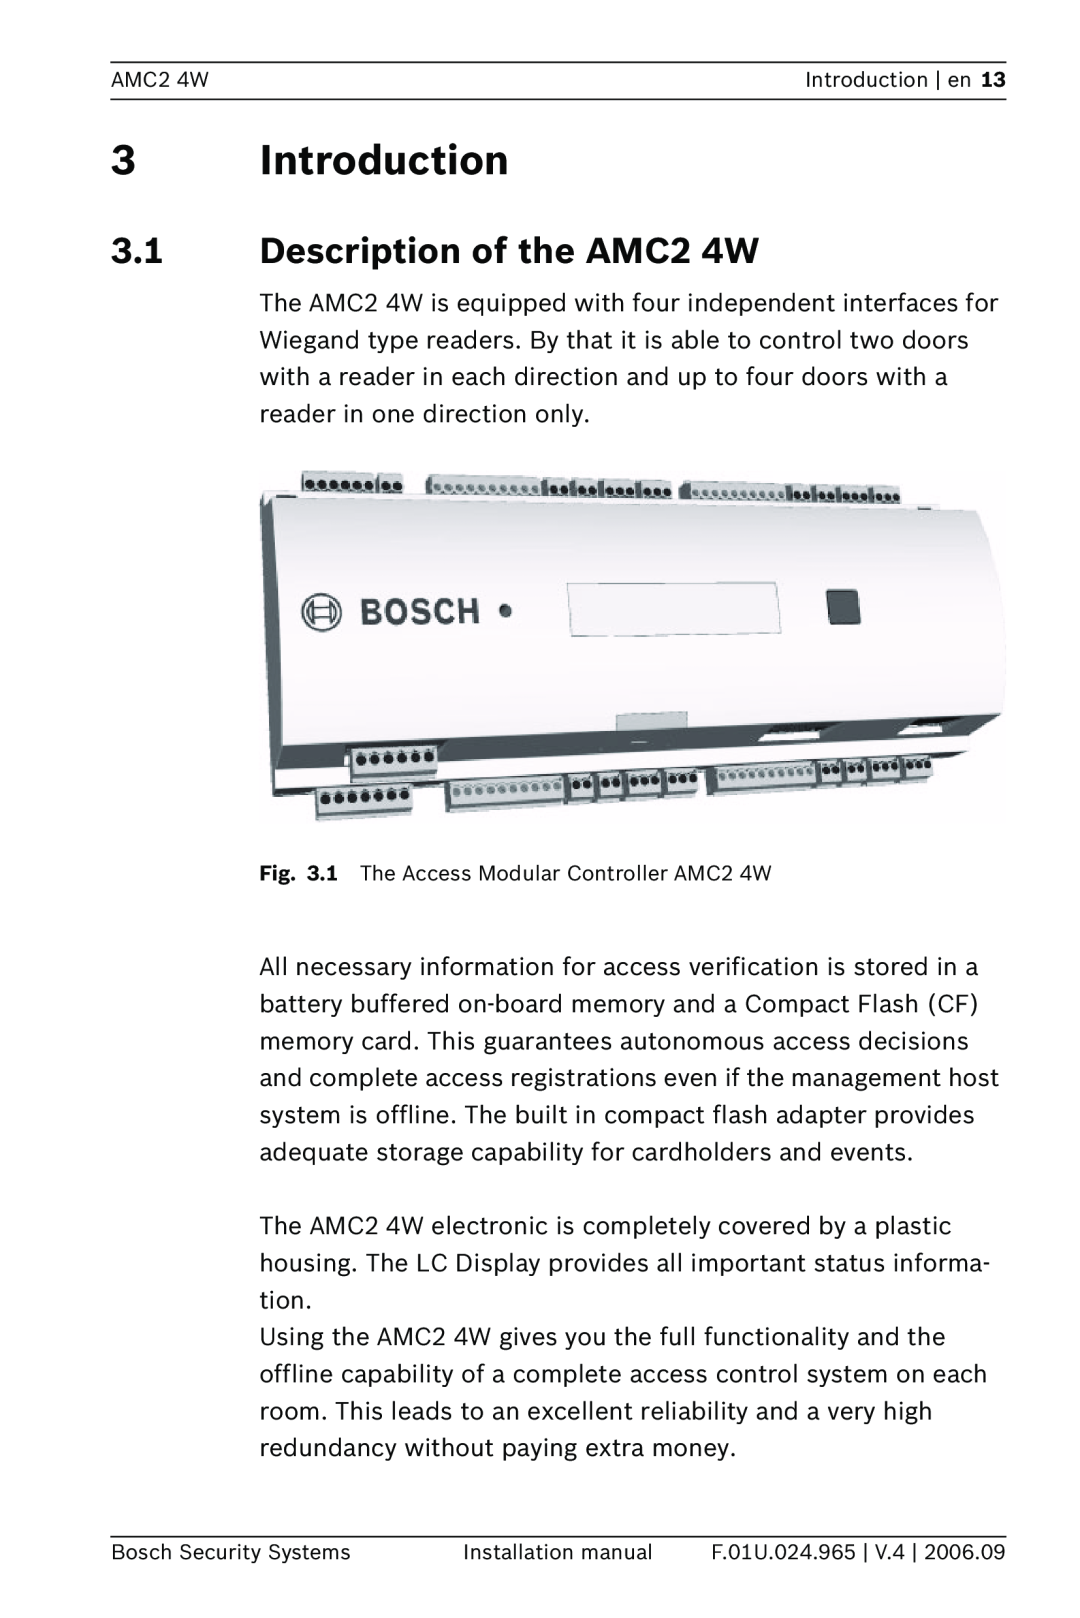 Bosch Appliances APC-AMC2-4WCF, APC-AMC2-4WUS installation manual 3Introduction, 3.1Description of the AMC2 4W 